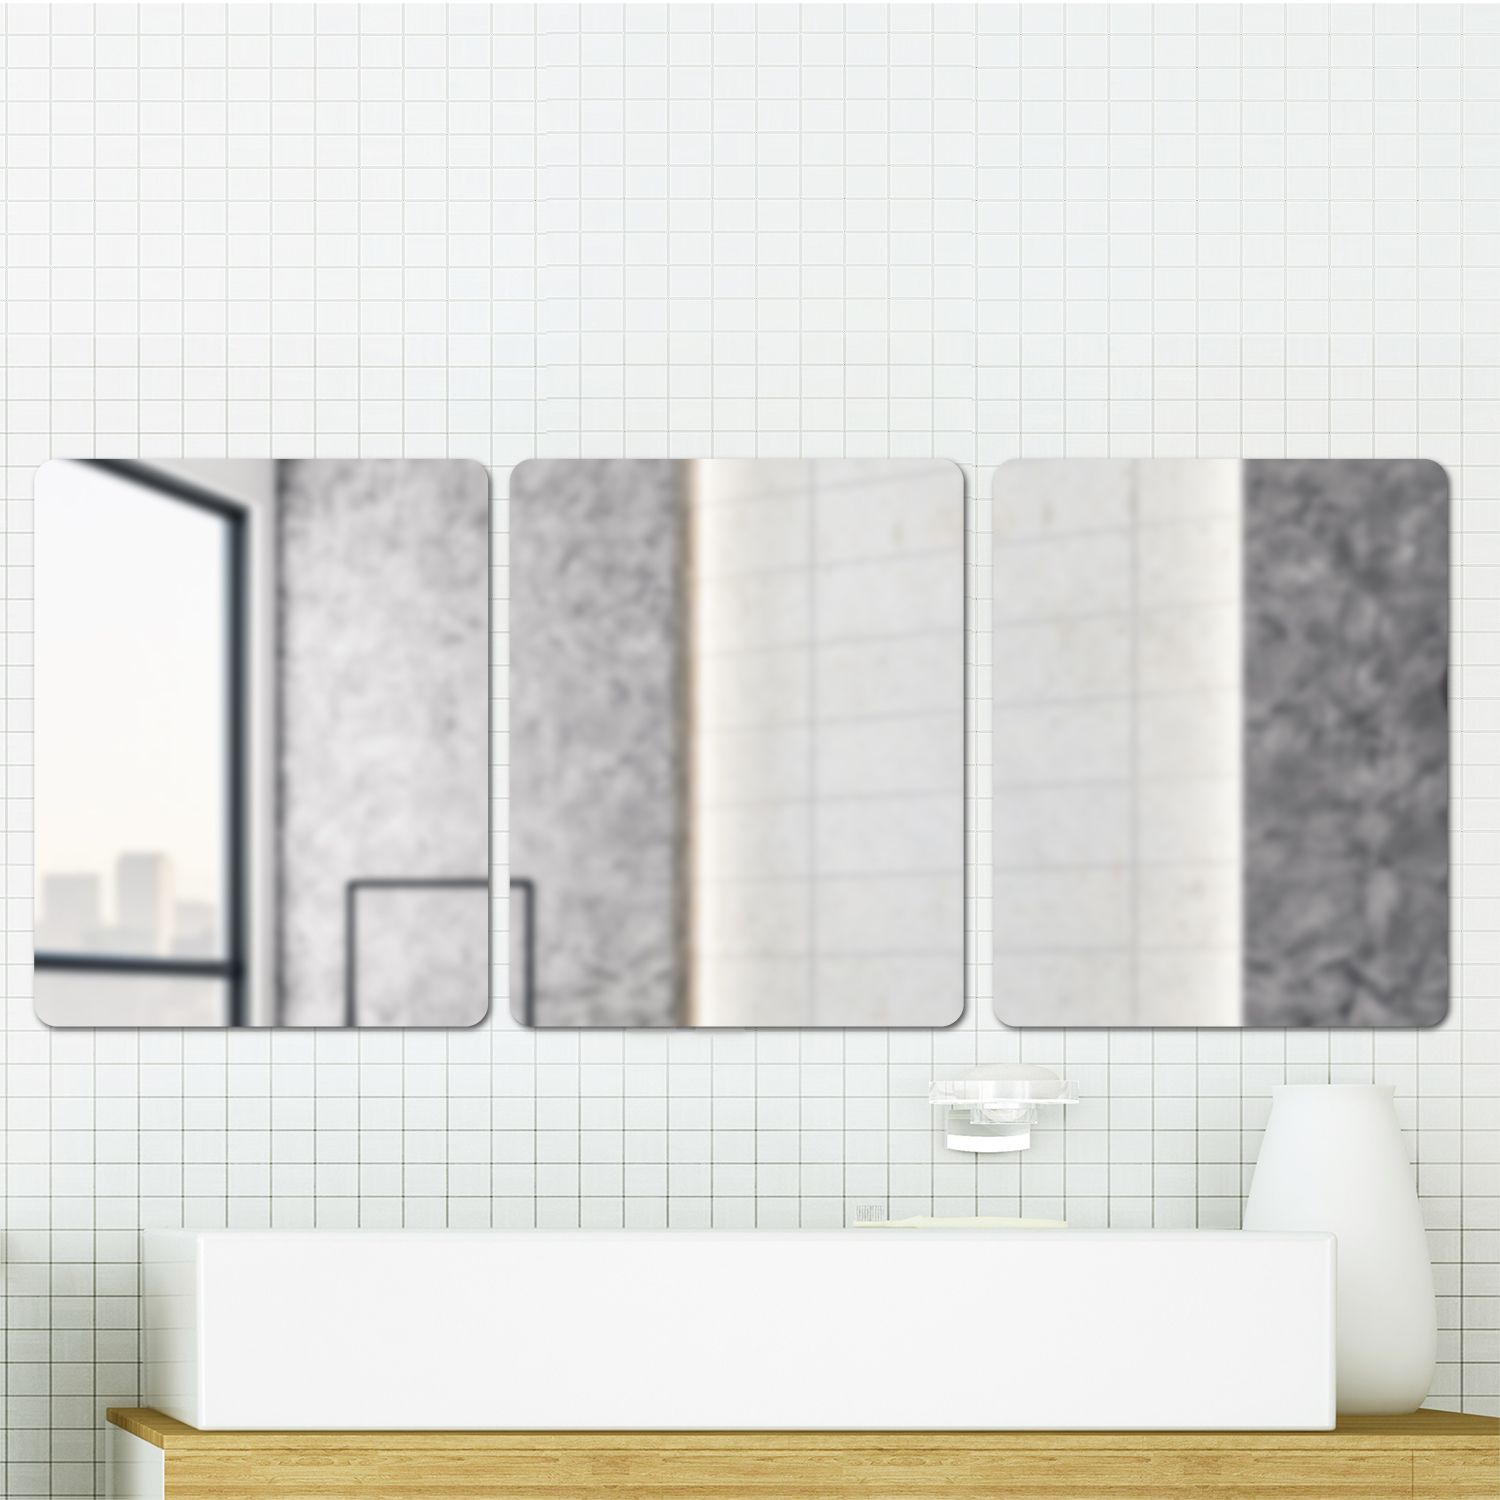 Walplus Minimalist Rectangular Acrylic Wall Mirror Tiles Art Decor 3pcs Inside Tiled Wall Mirrors (View 7 of 15)